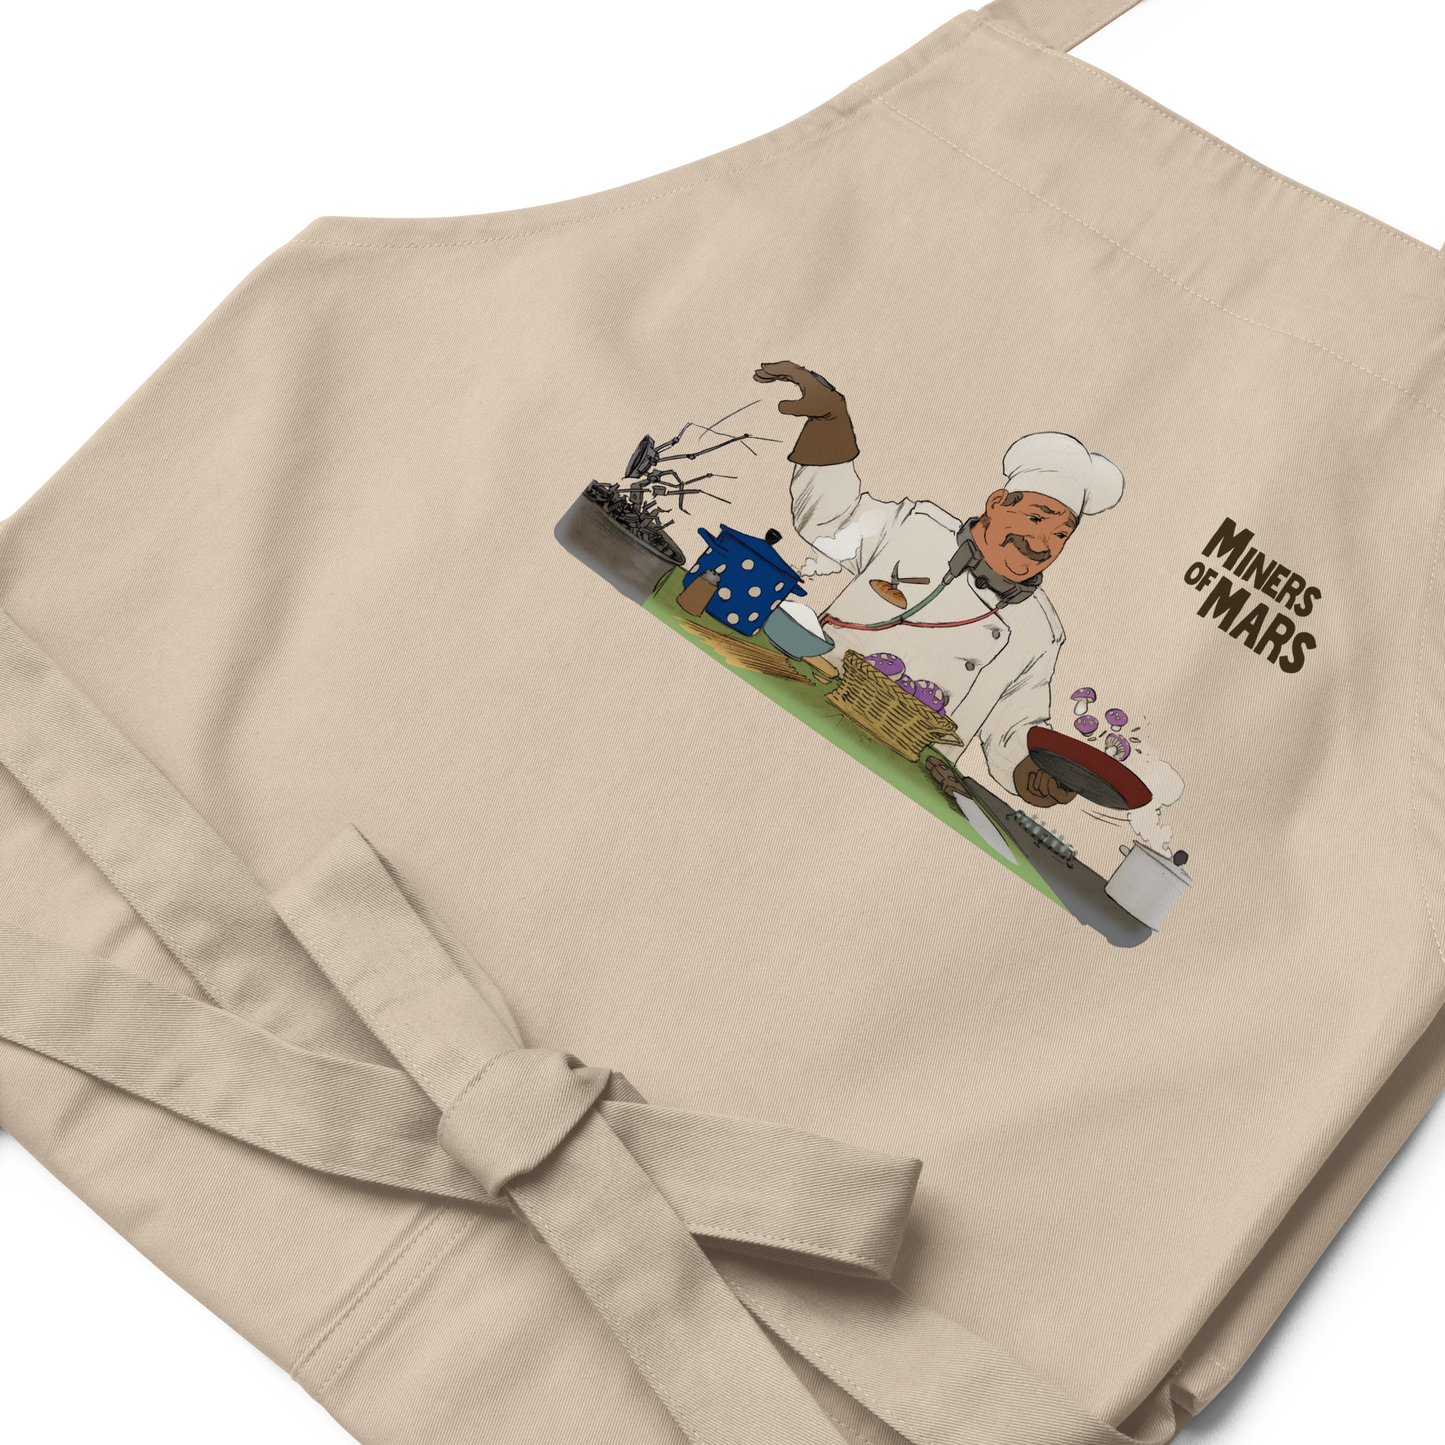 Organic cotton apron